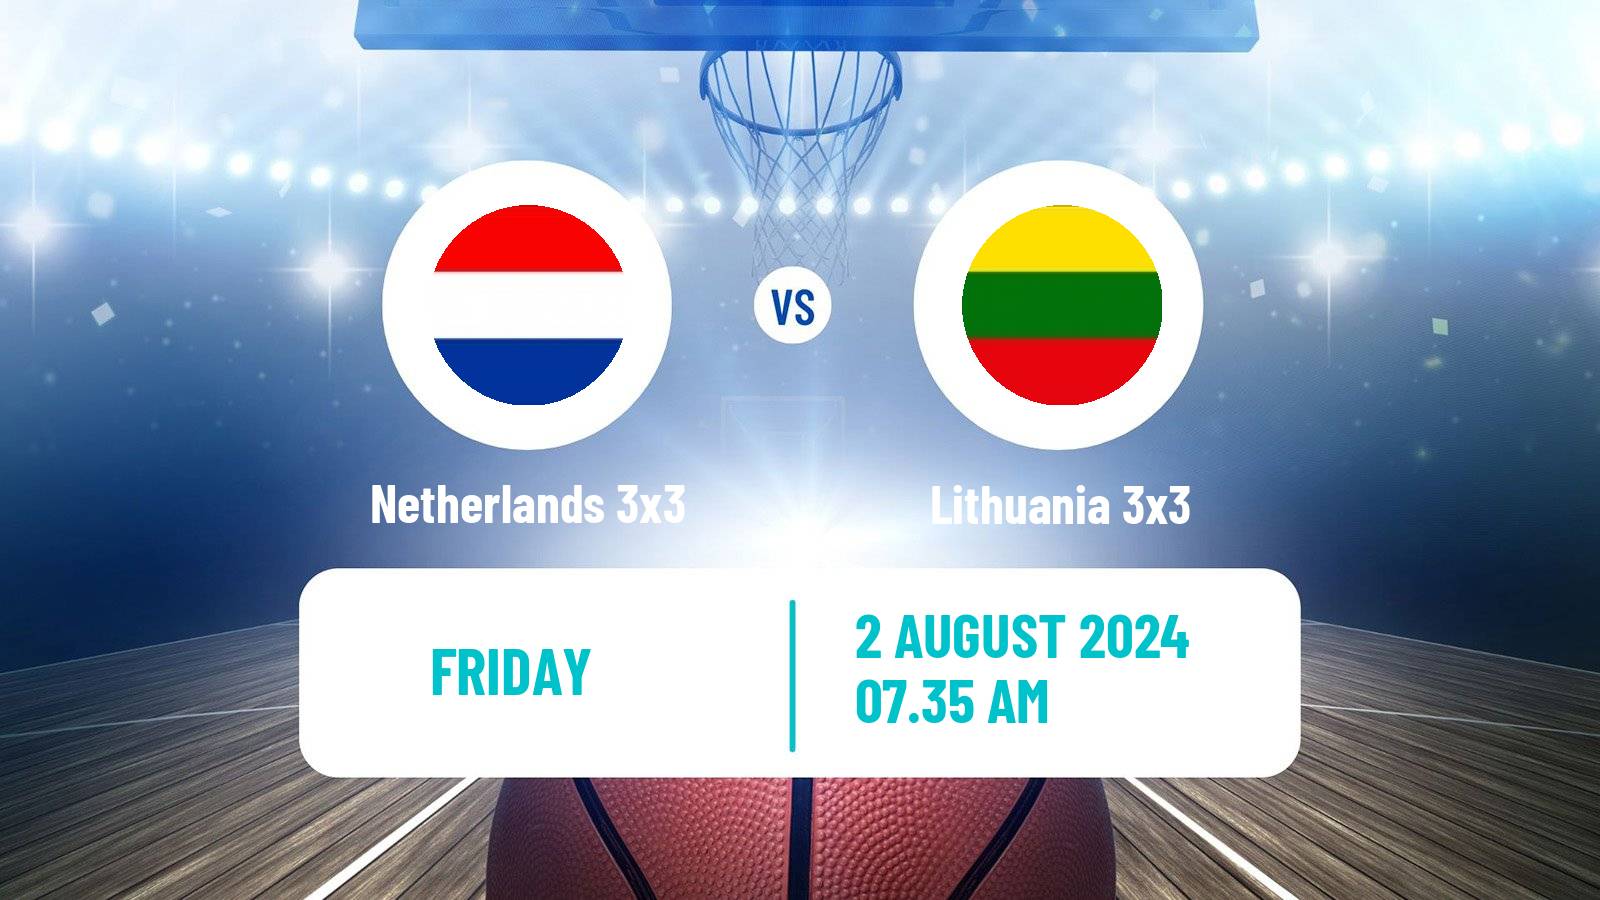 Basketball Olympic Games Basketball 3x3 Netherlands 3x3 - Lithuania 3x3